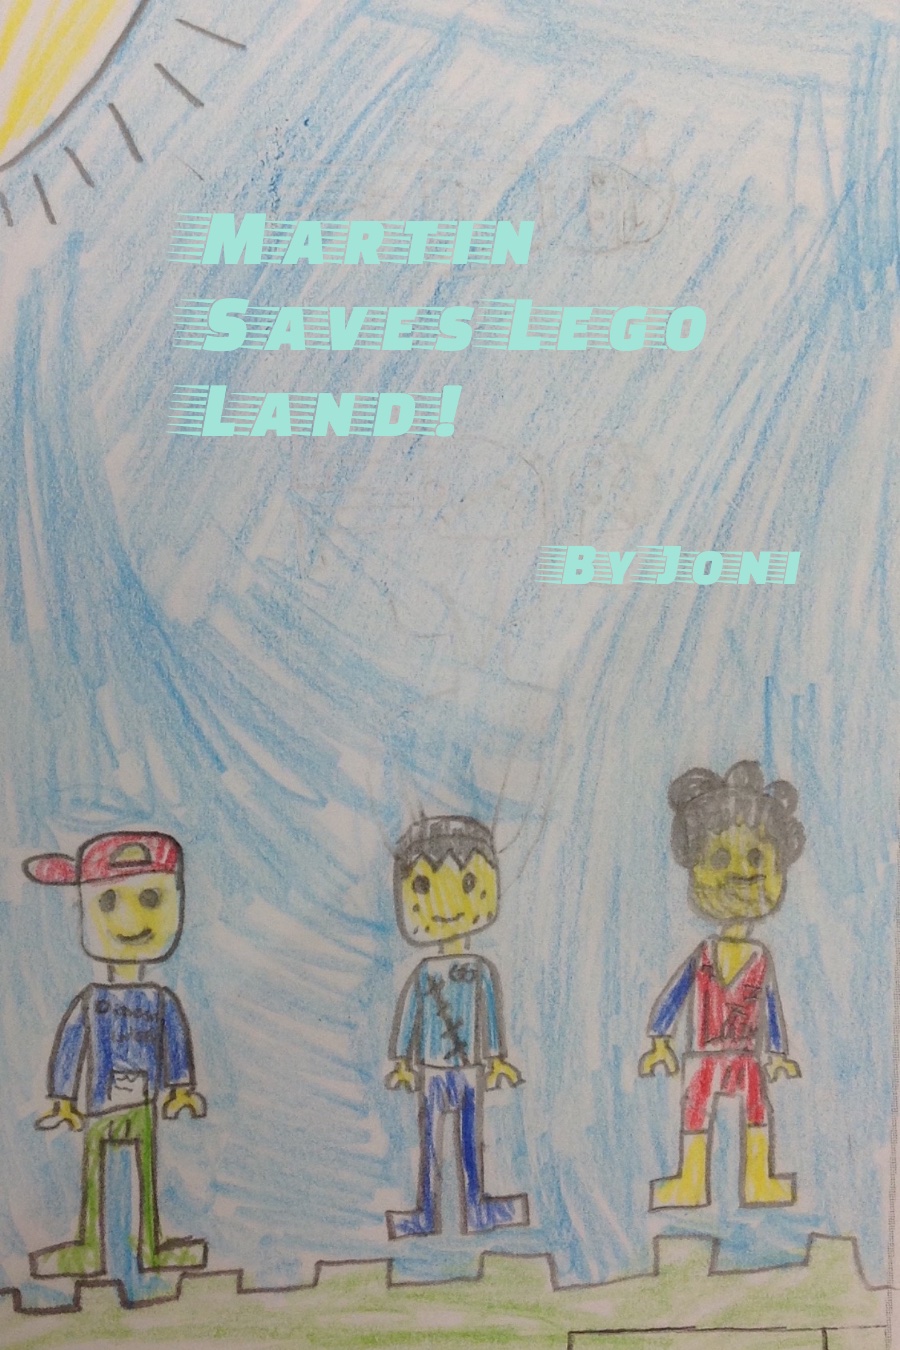 Martin Saves Lego Land by Joni W